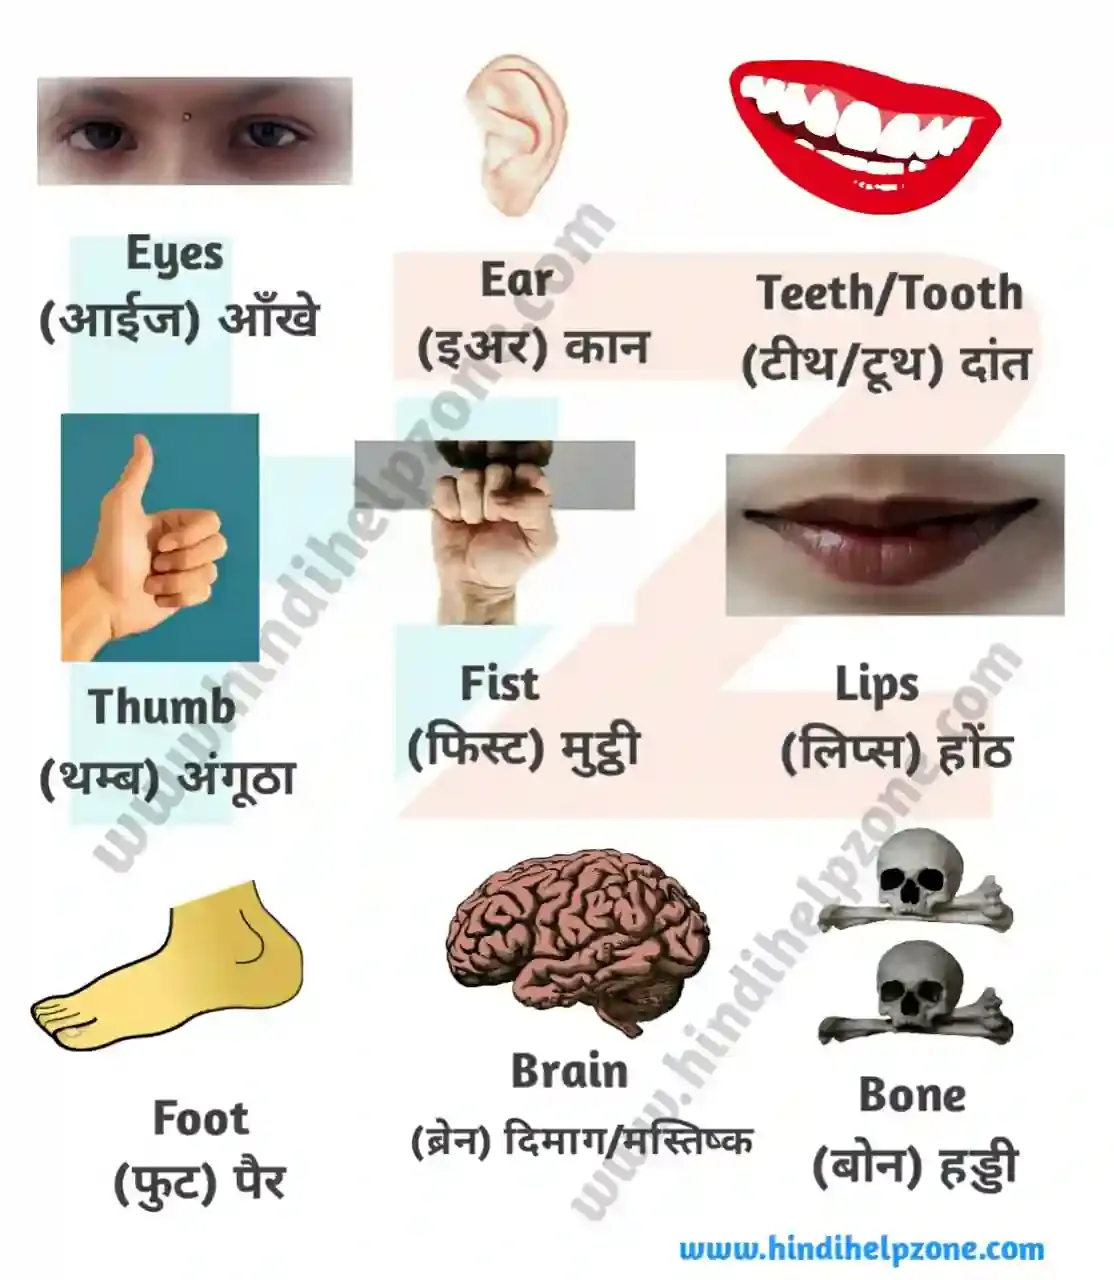 100+ Human Body Parts Name List In Hindi And English (pdf) - मानव शरीर के अंगों के नाम